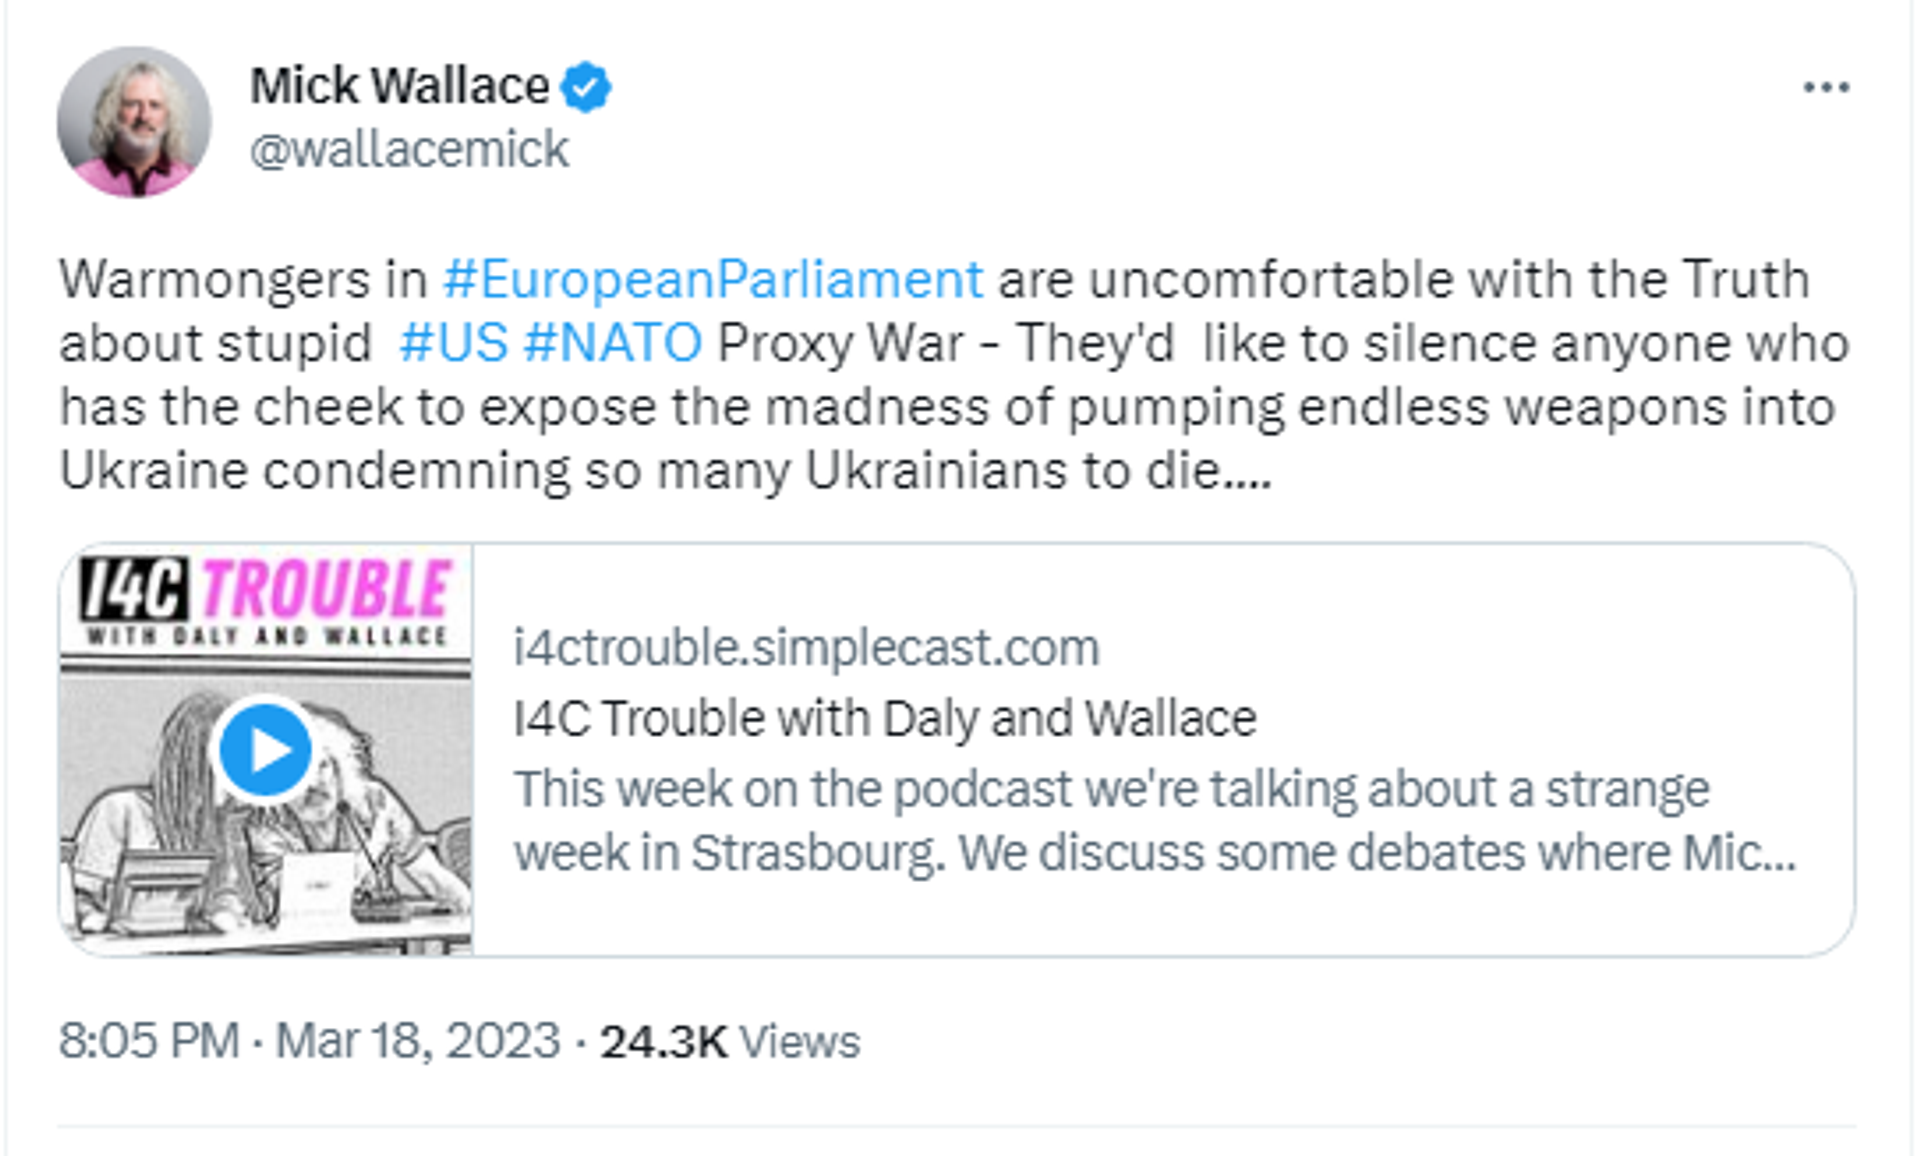 Screenshot of Twitter post by Michael Wallace, an Irish politician and a Member of the European Parliament (MEP) from Ireland. - Sputnik International, 1920, 19.03.2023